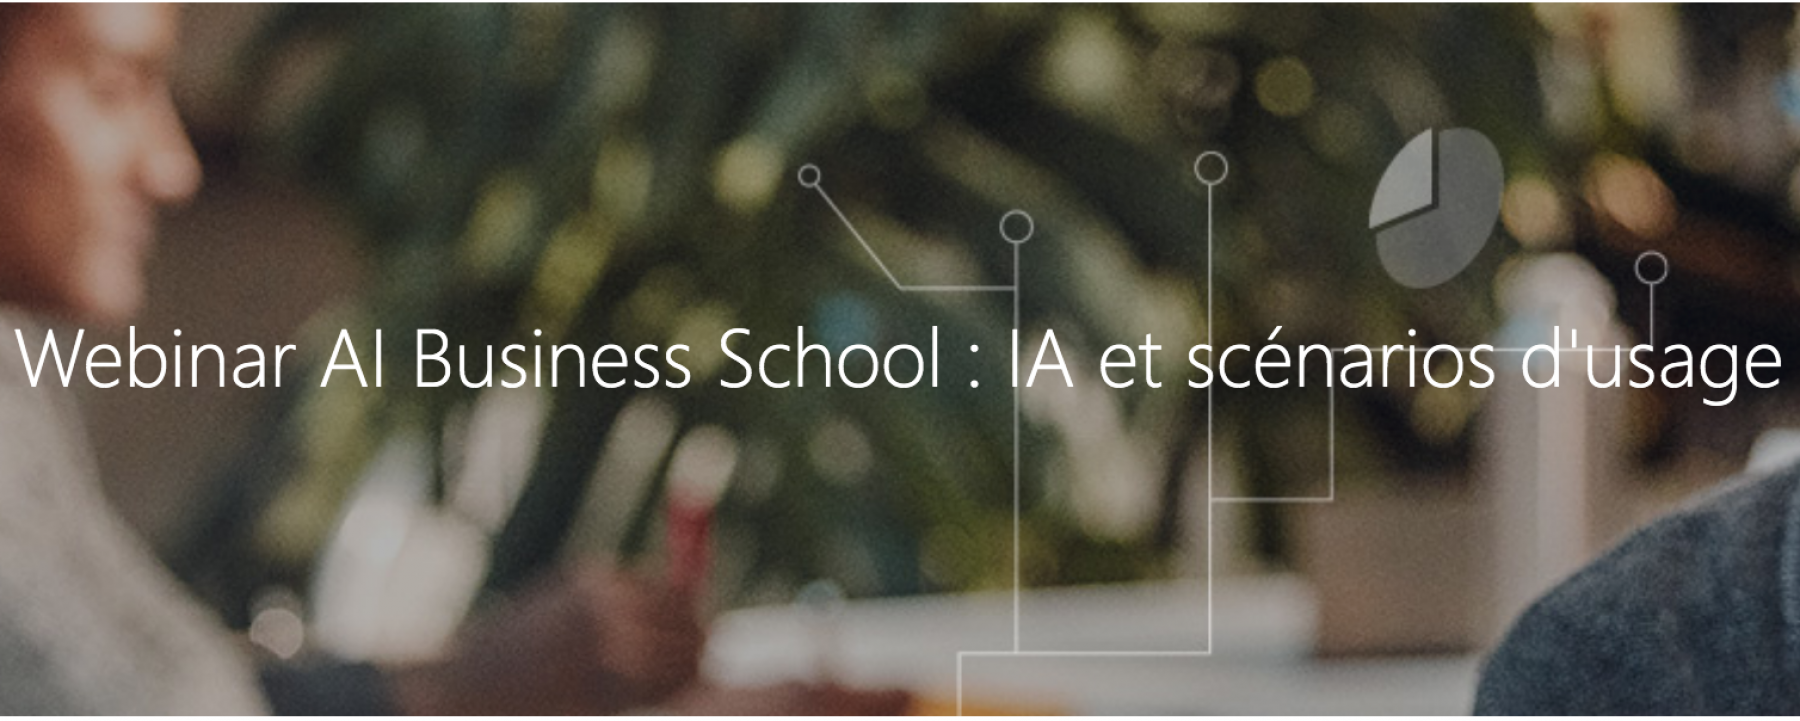 Webinar AI Business School : IA et scénarios d'usage, le 2 juin 2020, organisé par Microsoft 